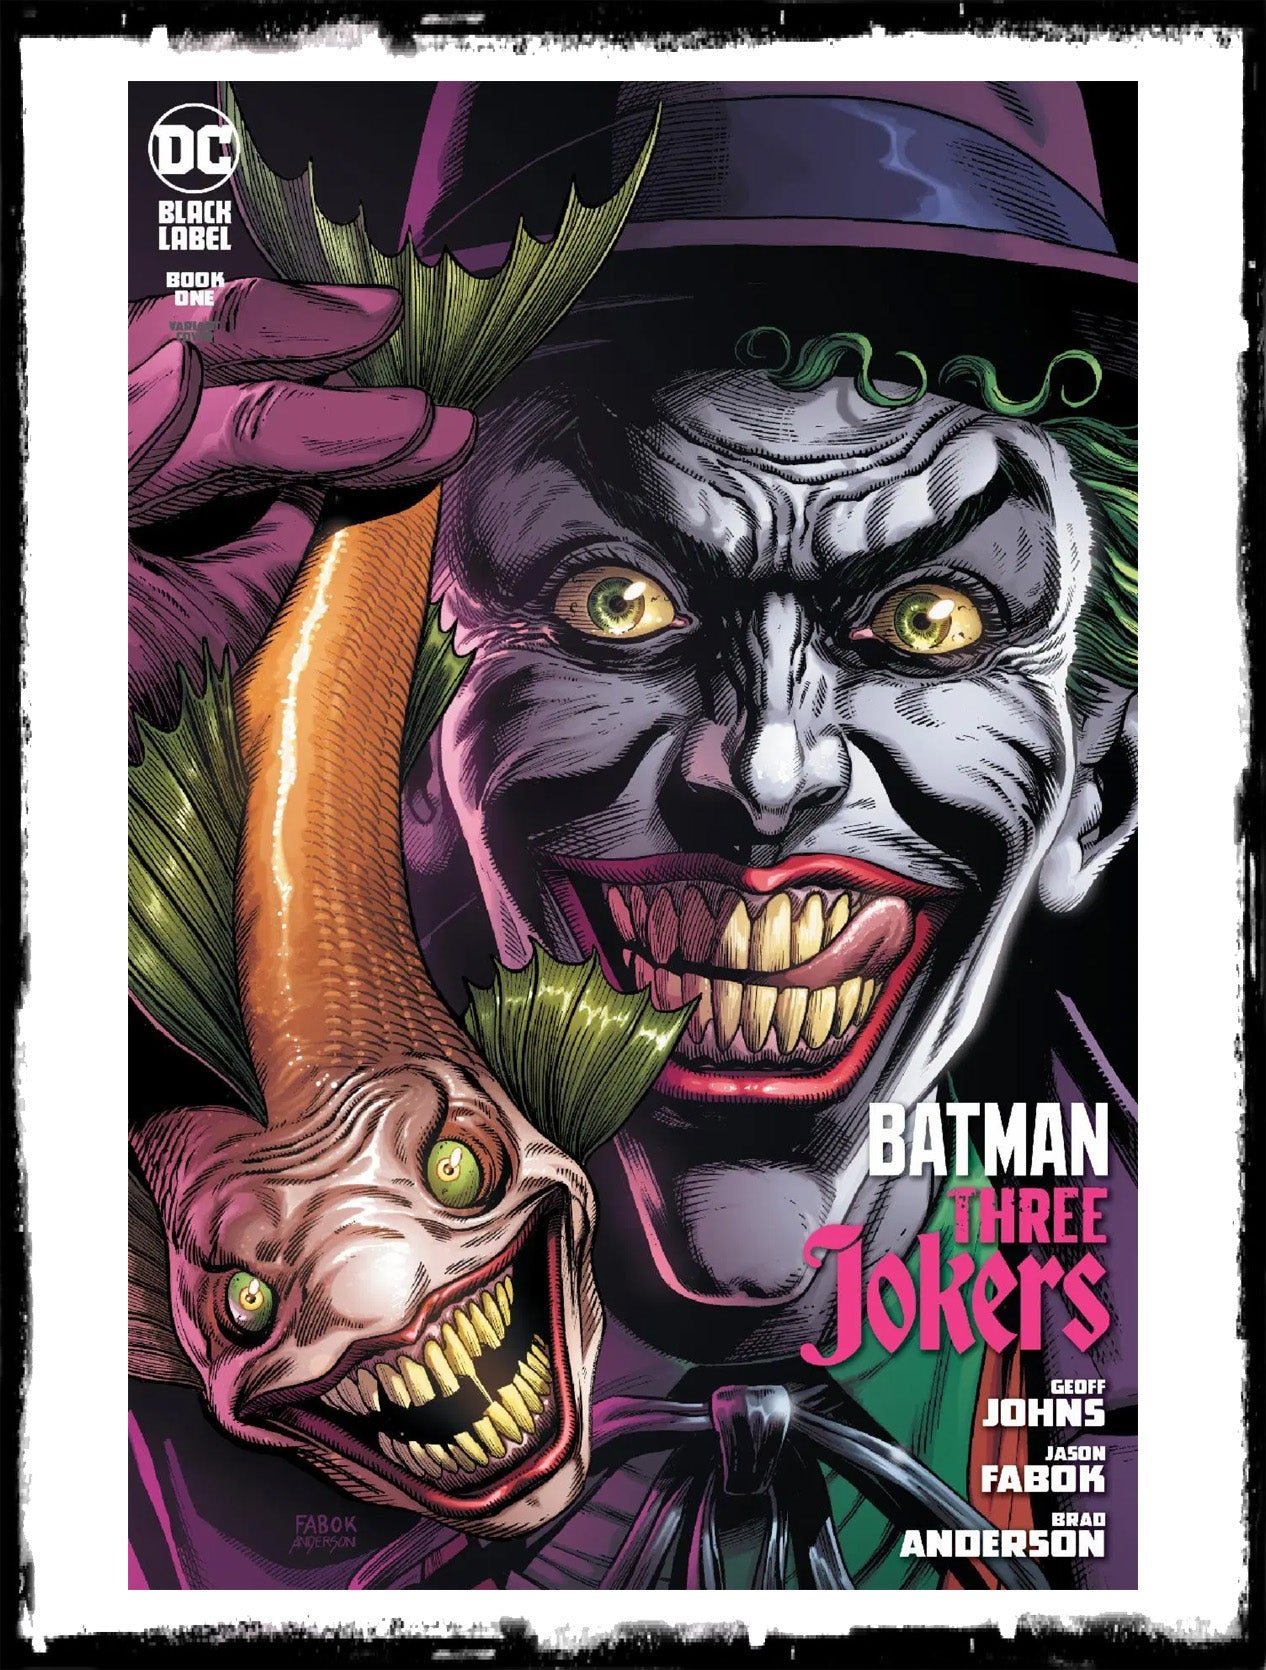 BATMAN: THREE JOKERS - #1 JASON FABOK COVER B! (2020 - NM)